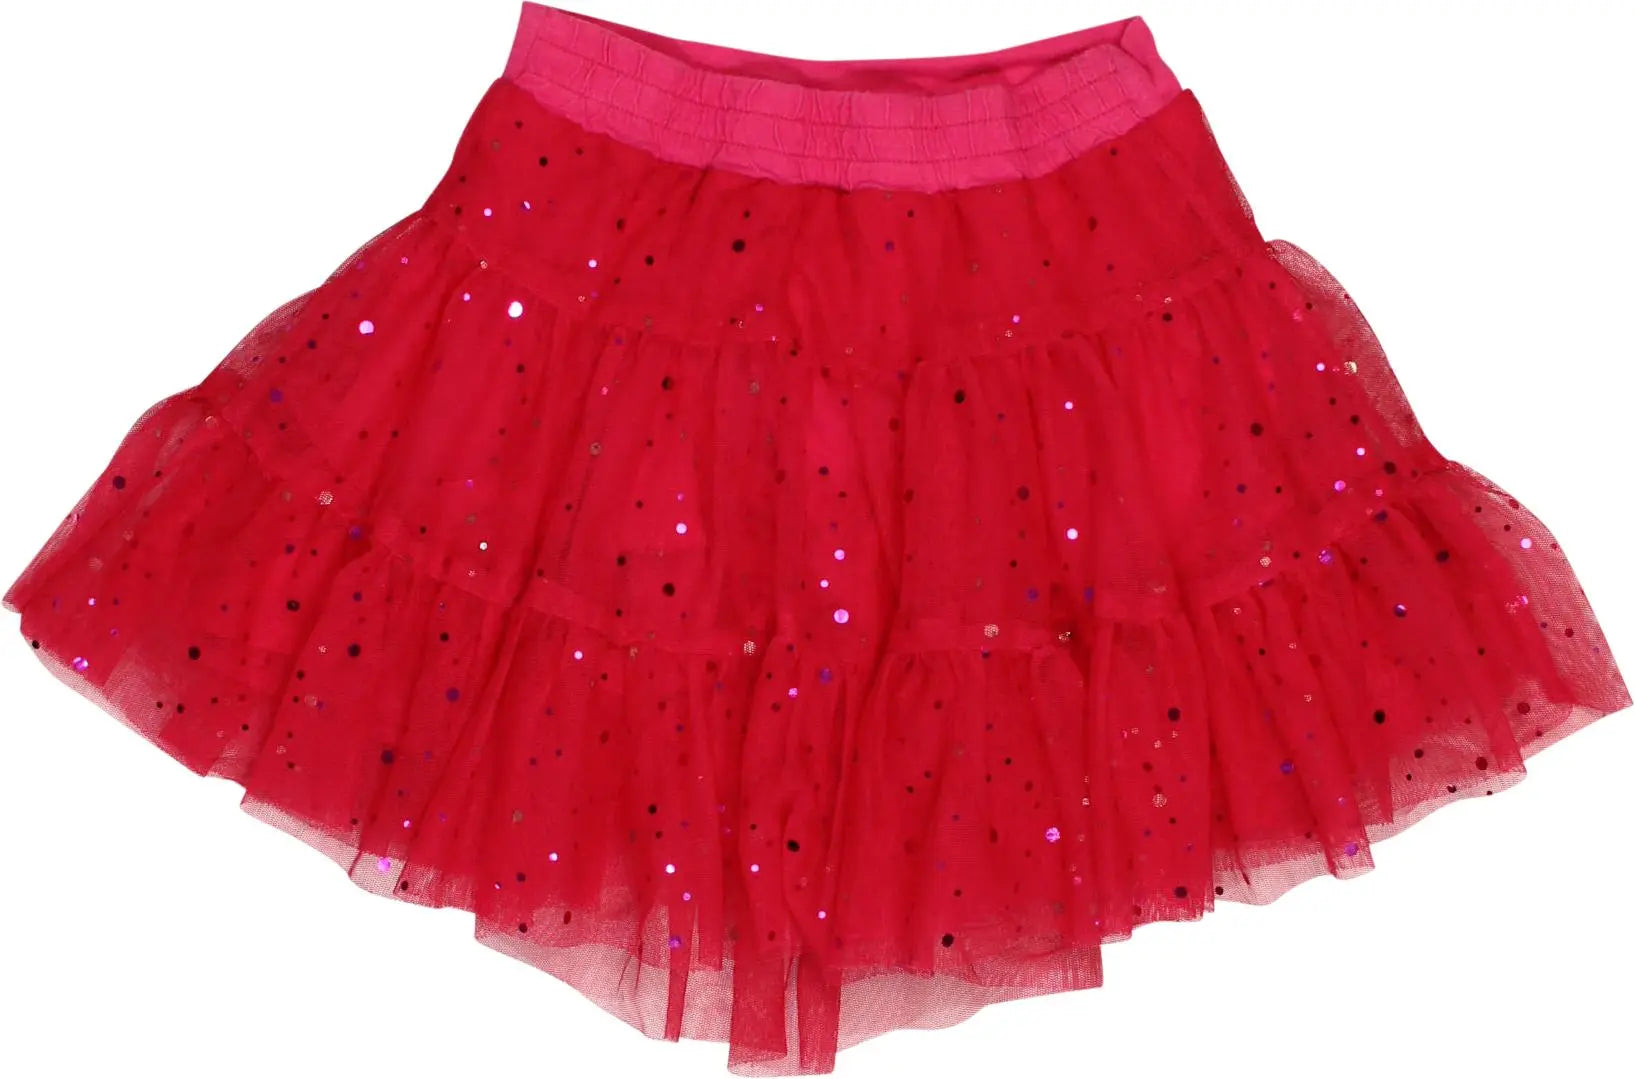 Frendz - Pink Skirt- ThriftTale.com - Vintage and second handclothing